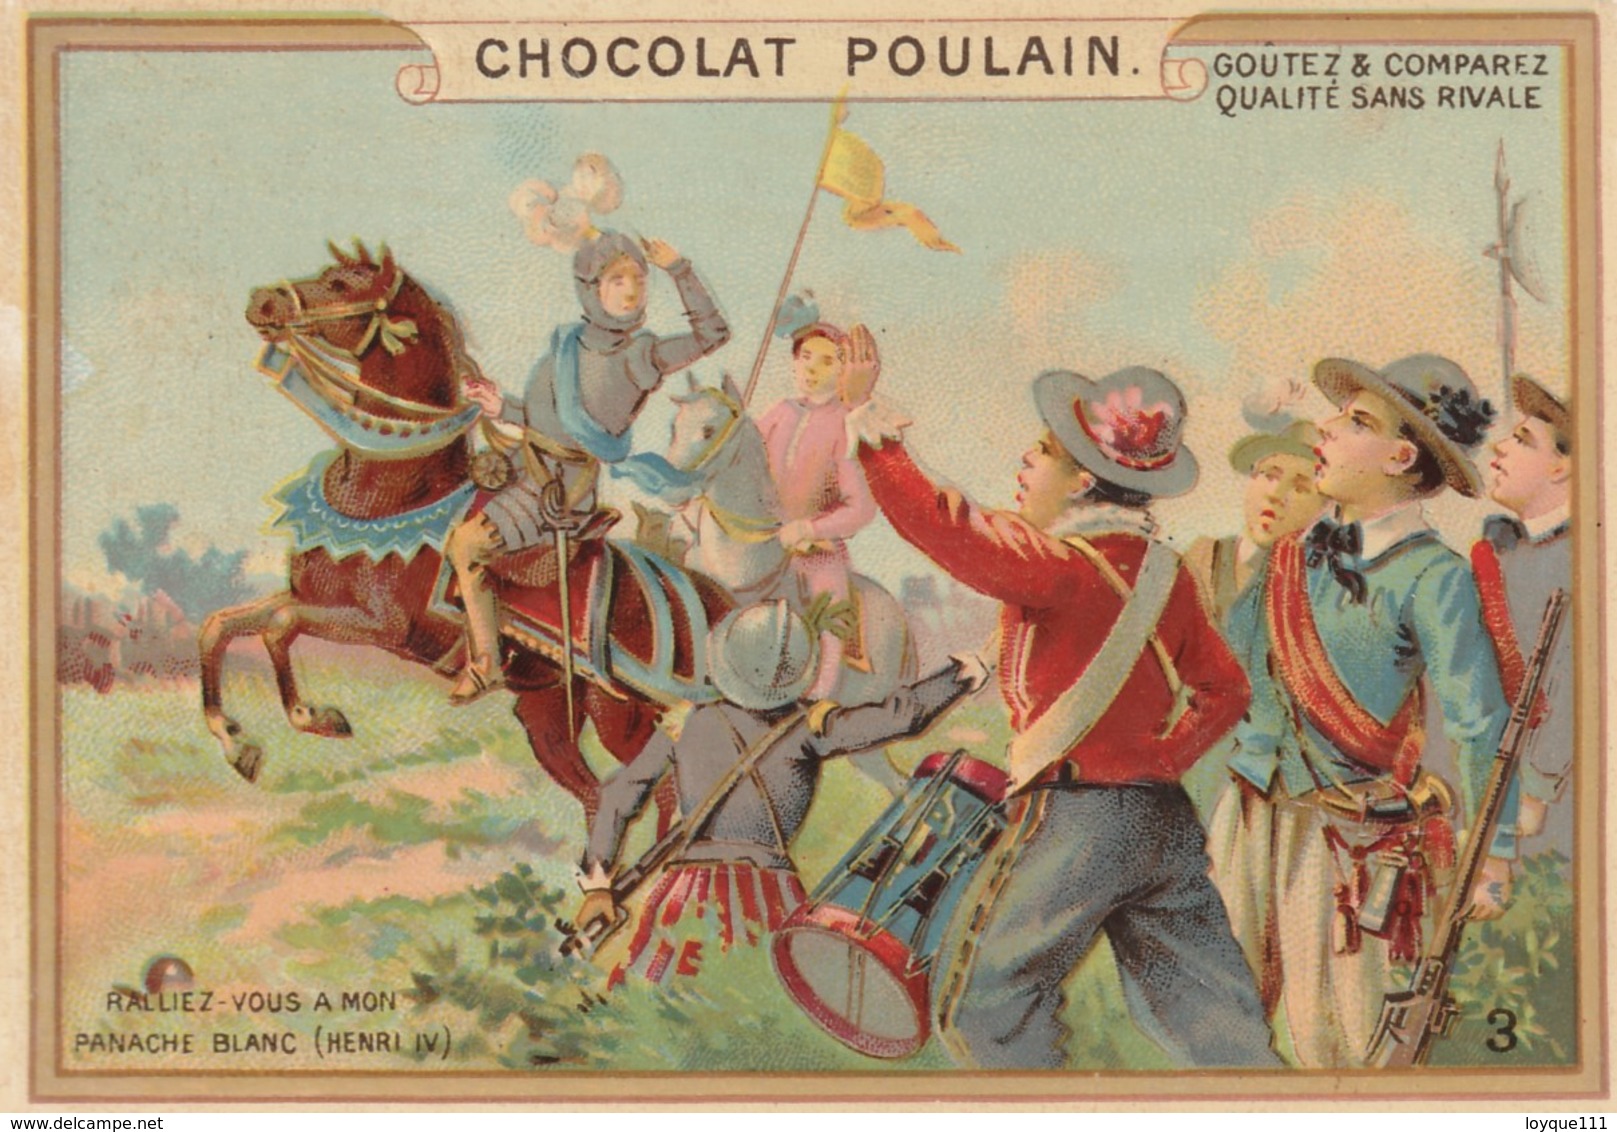 Chromo Poulain. N°3 / Ralliez Vous A Mon Panache Blanc - Chocolate